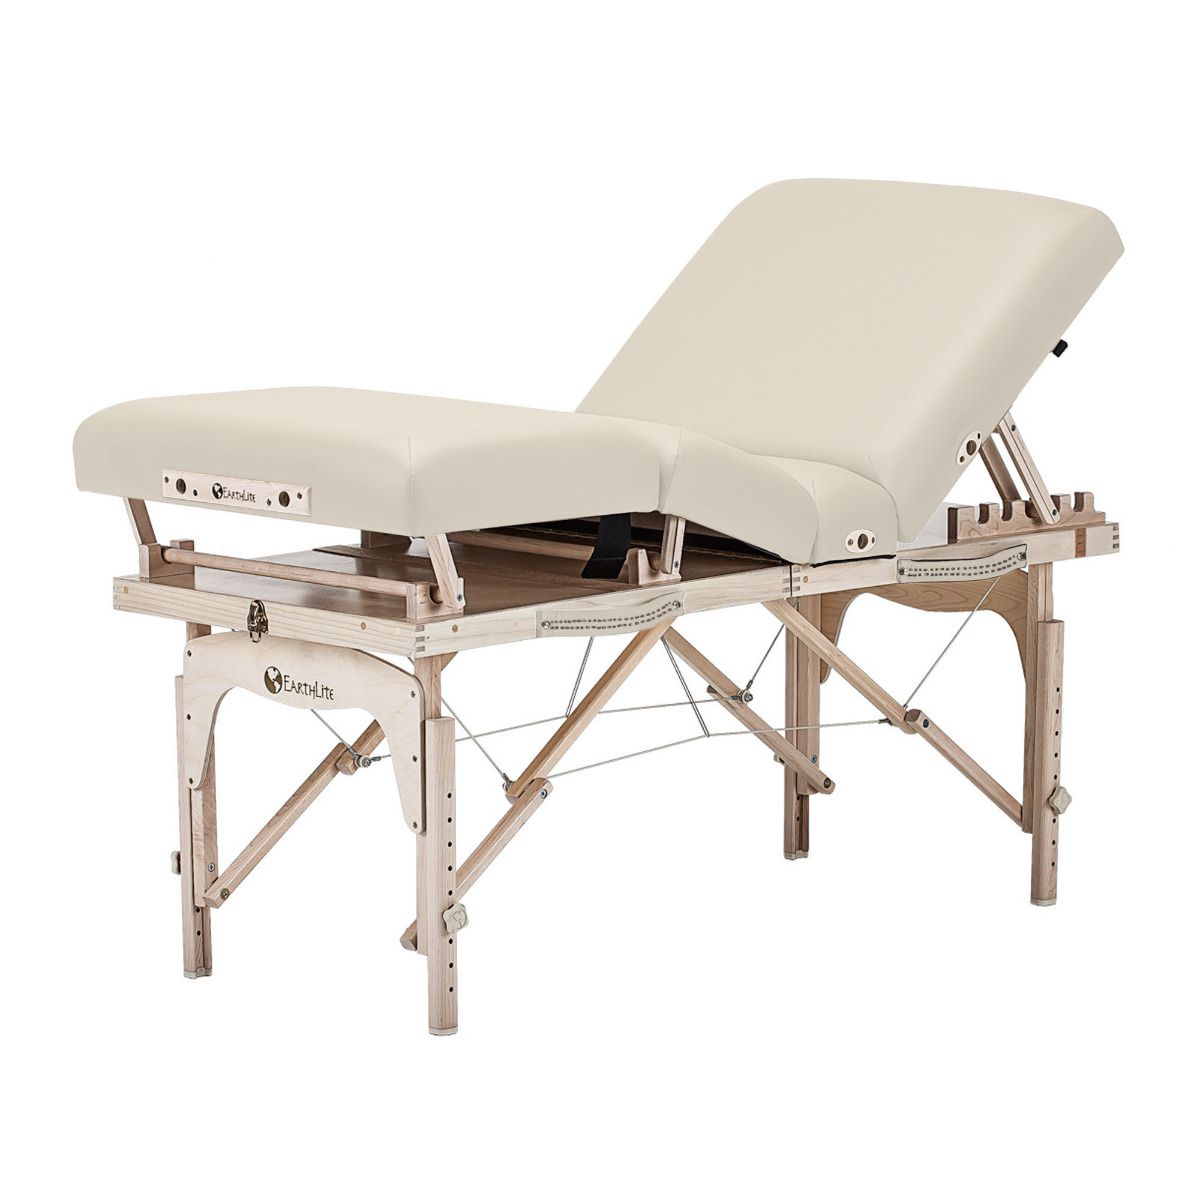 Calistoga Portable Salon Massage Table